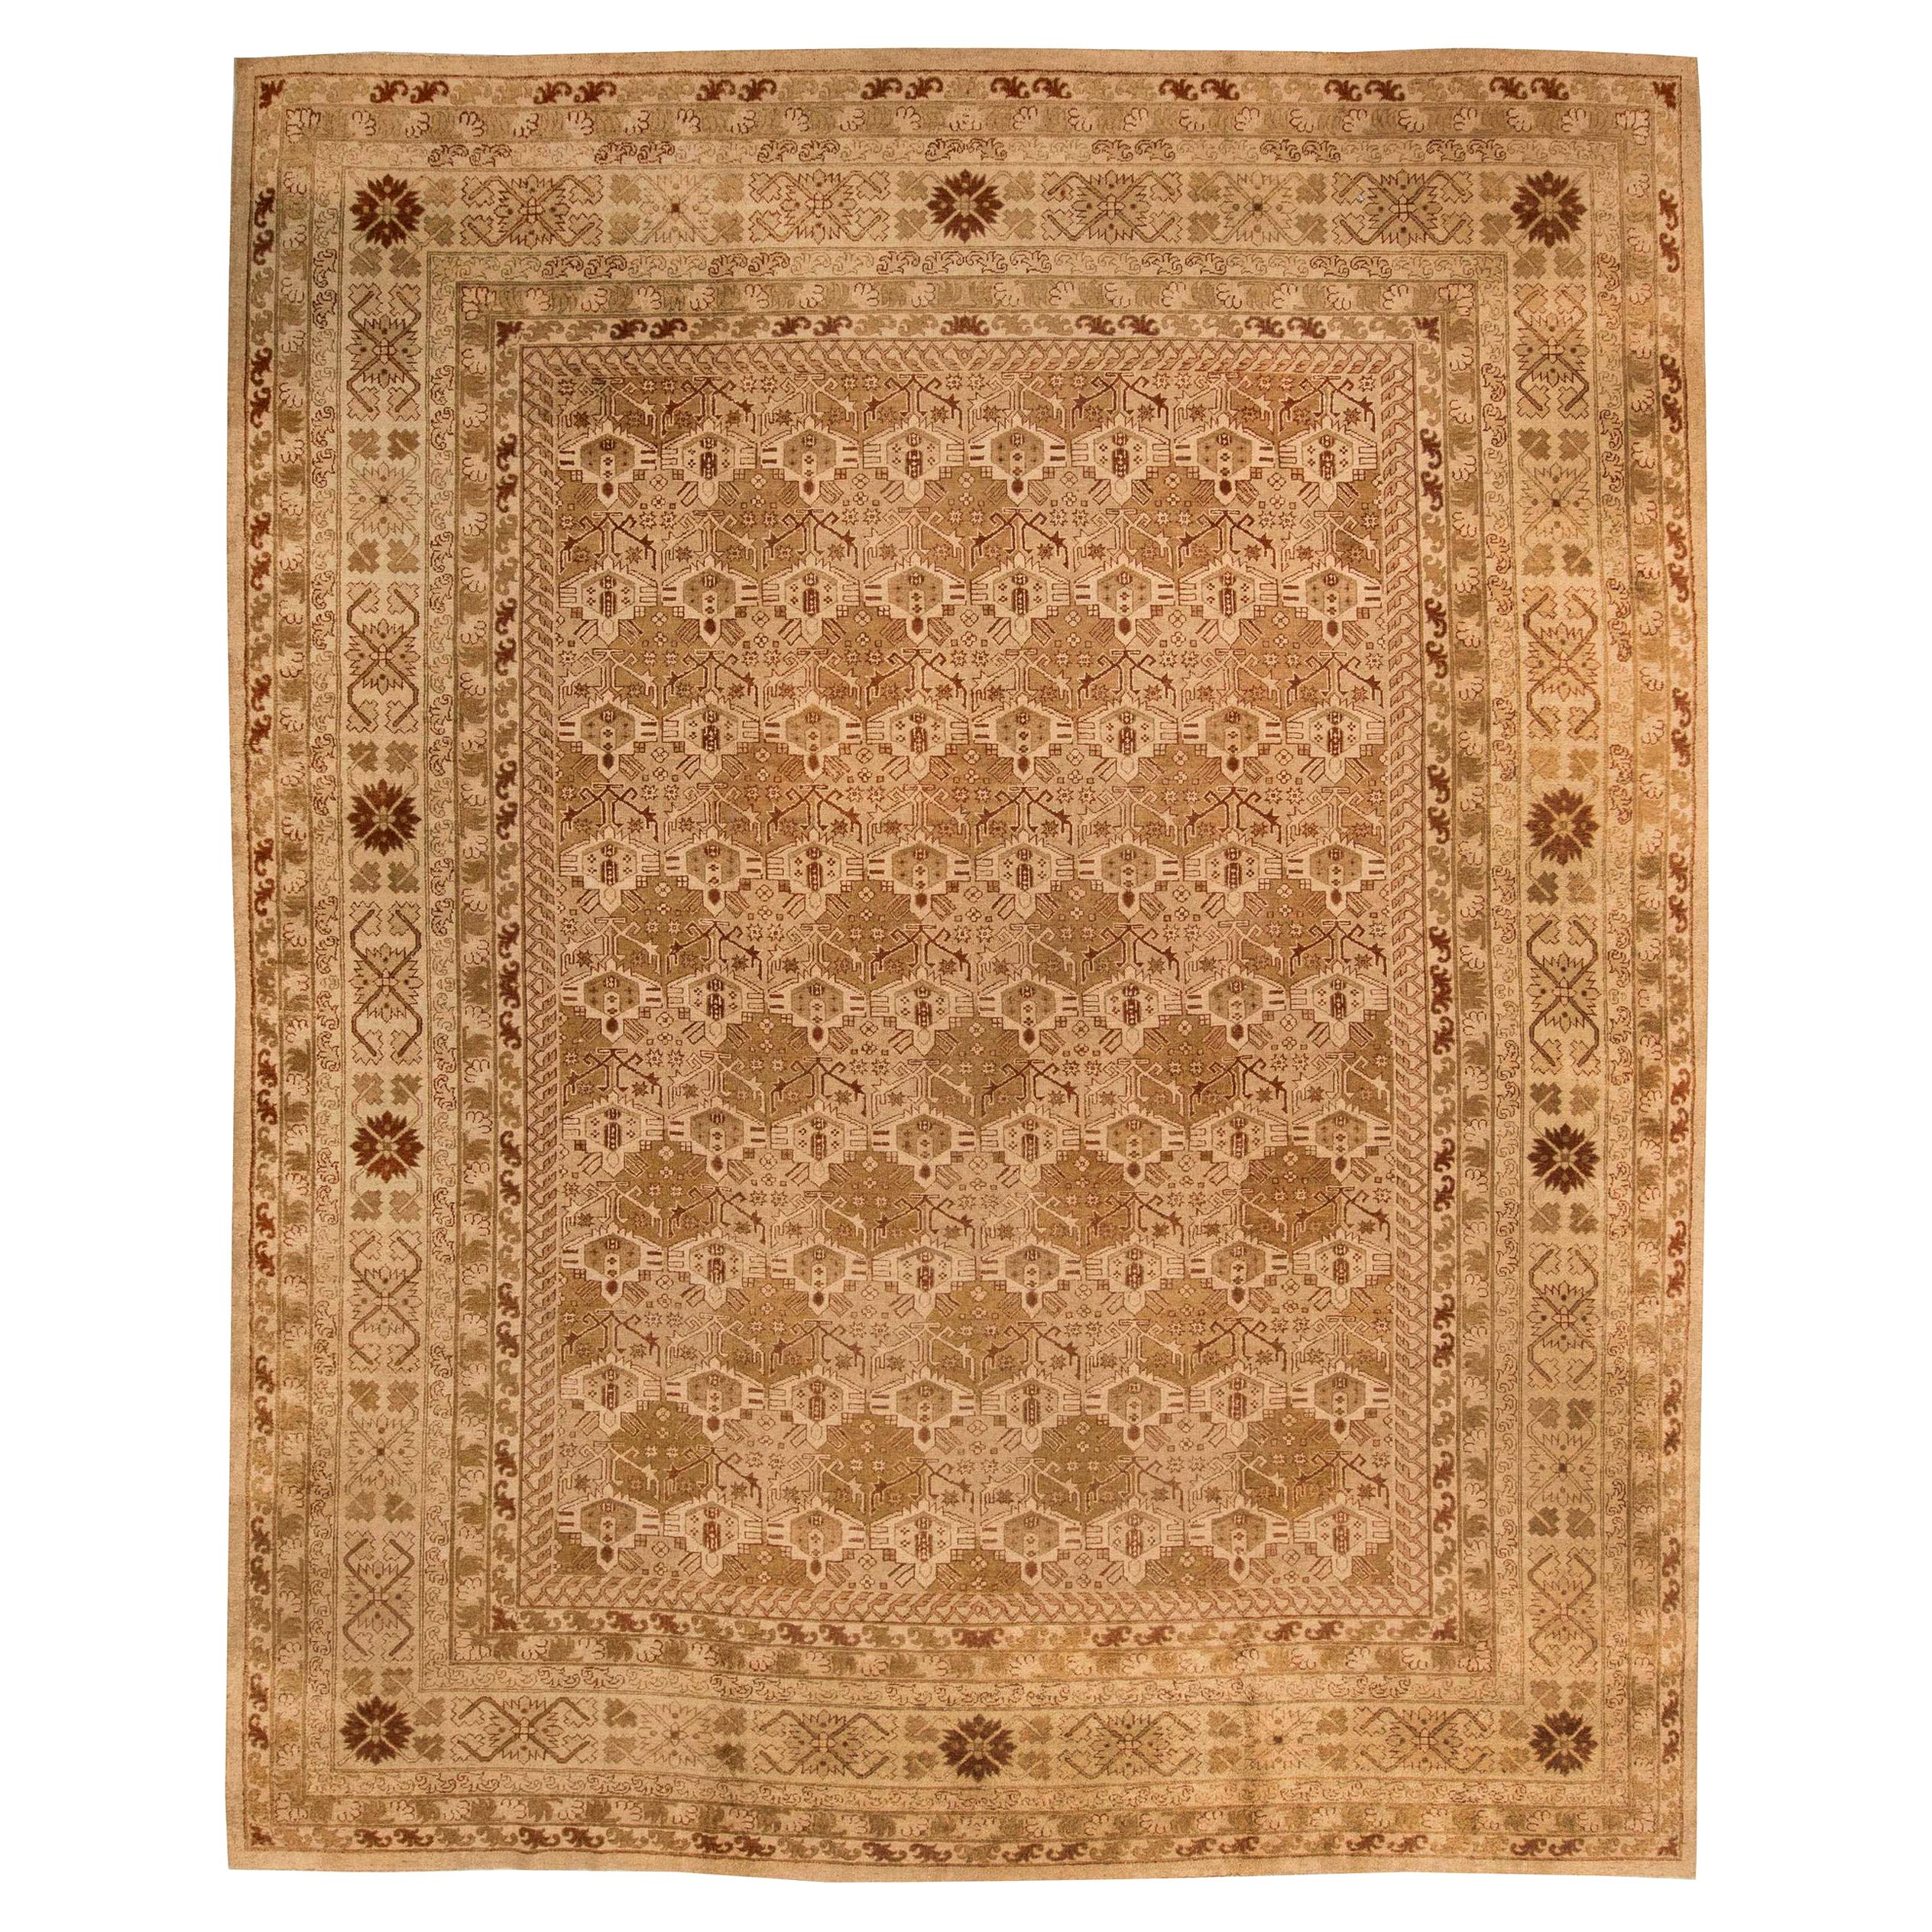 Early 20th Century Indian Amritsar Handmade Rug